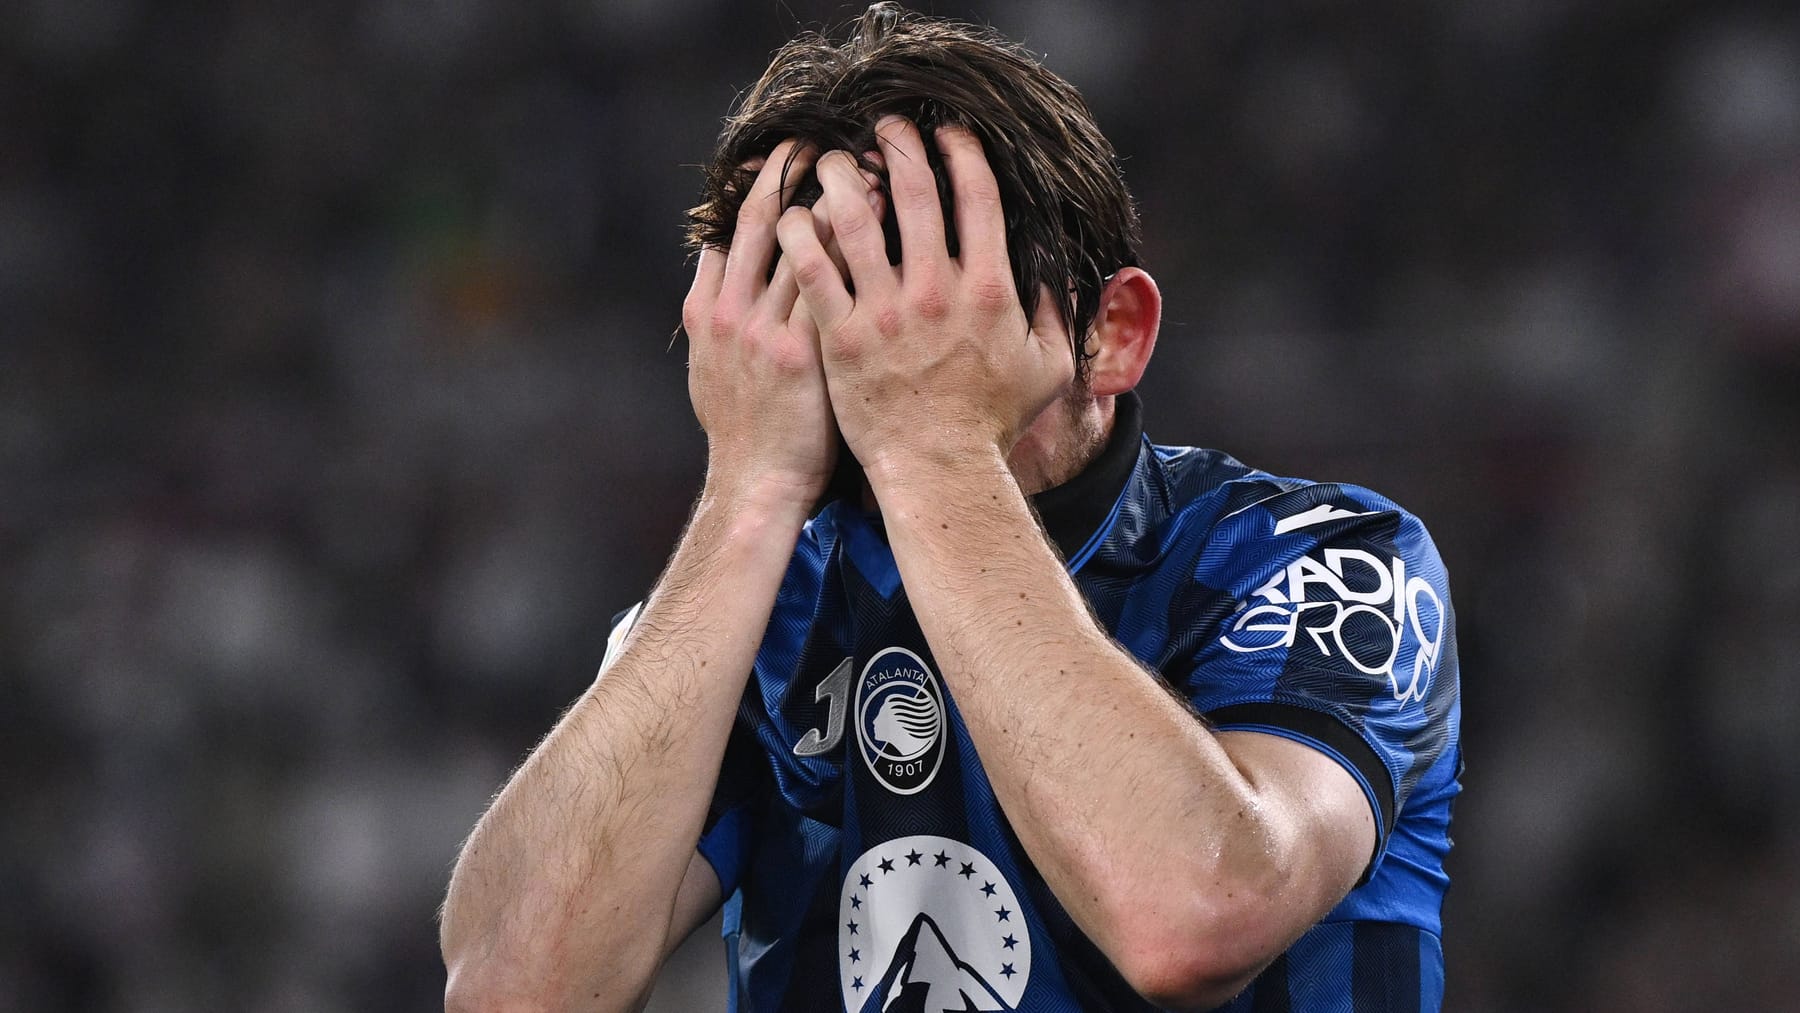 Europa League: Marten de Roon verpasst Finale – "Schlimmster Albtraum"